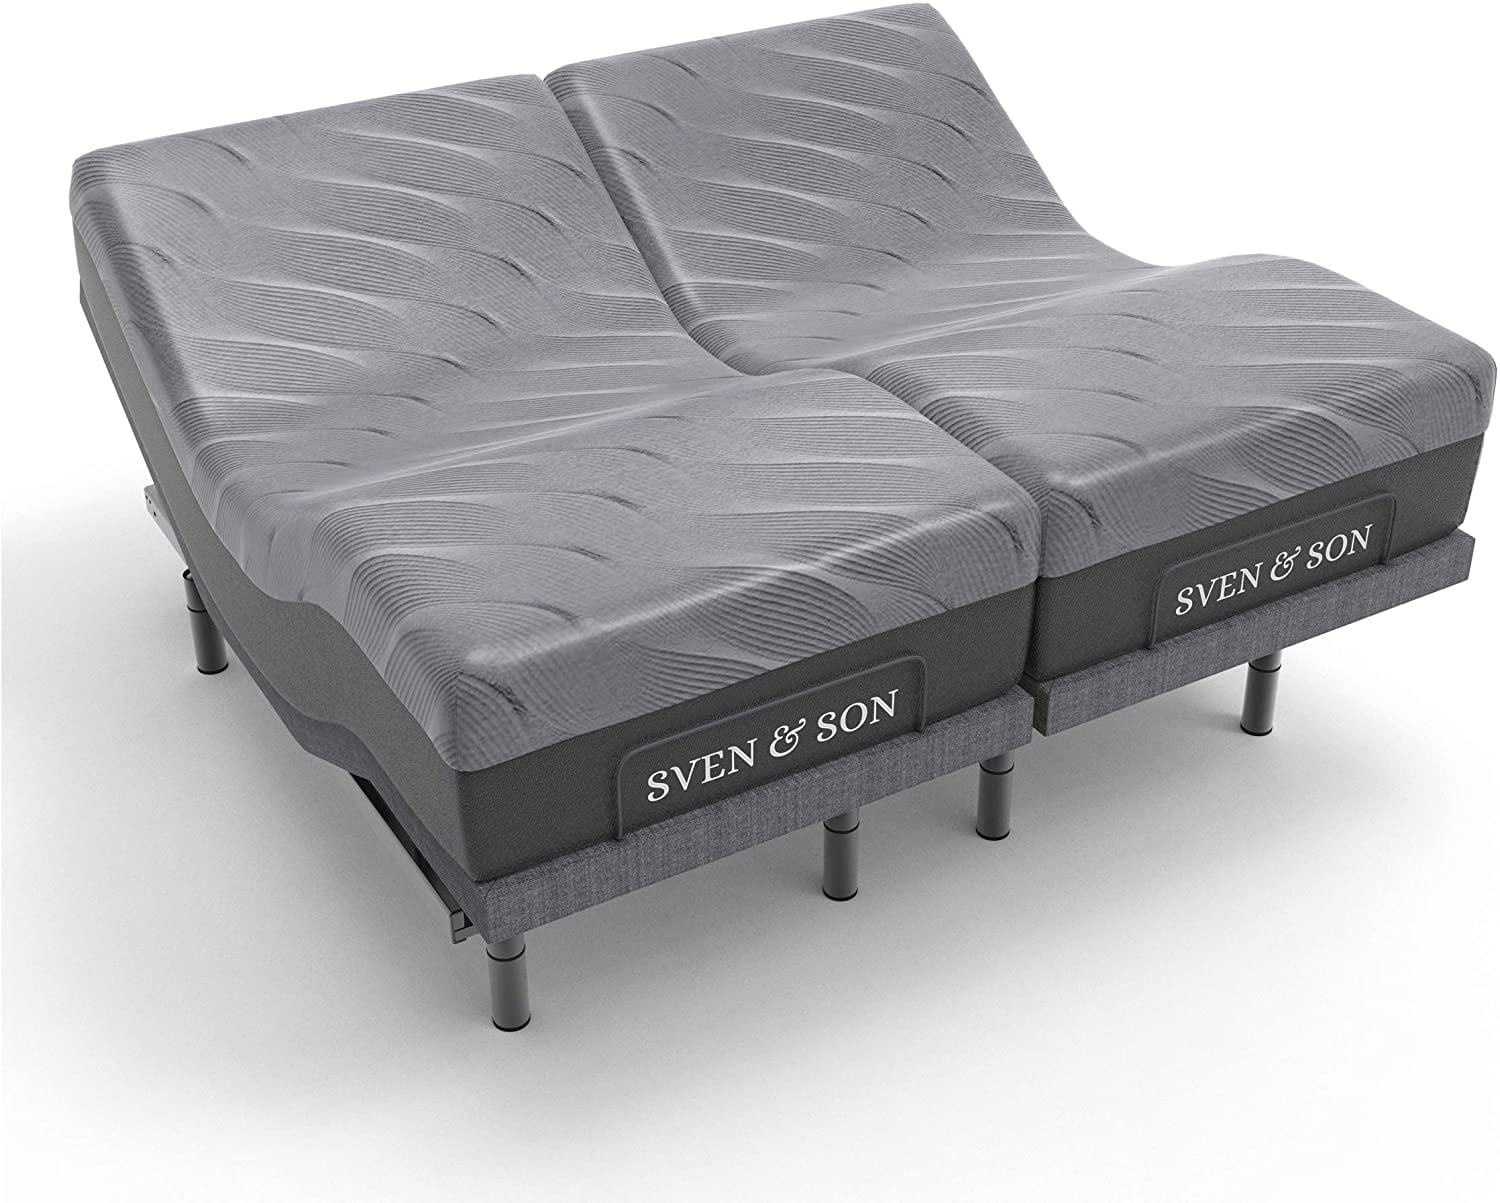 Sven Son Split King Adjustable Bed, Dual Mattress King Bed